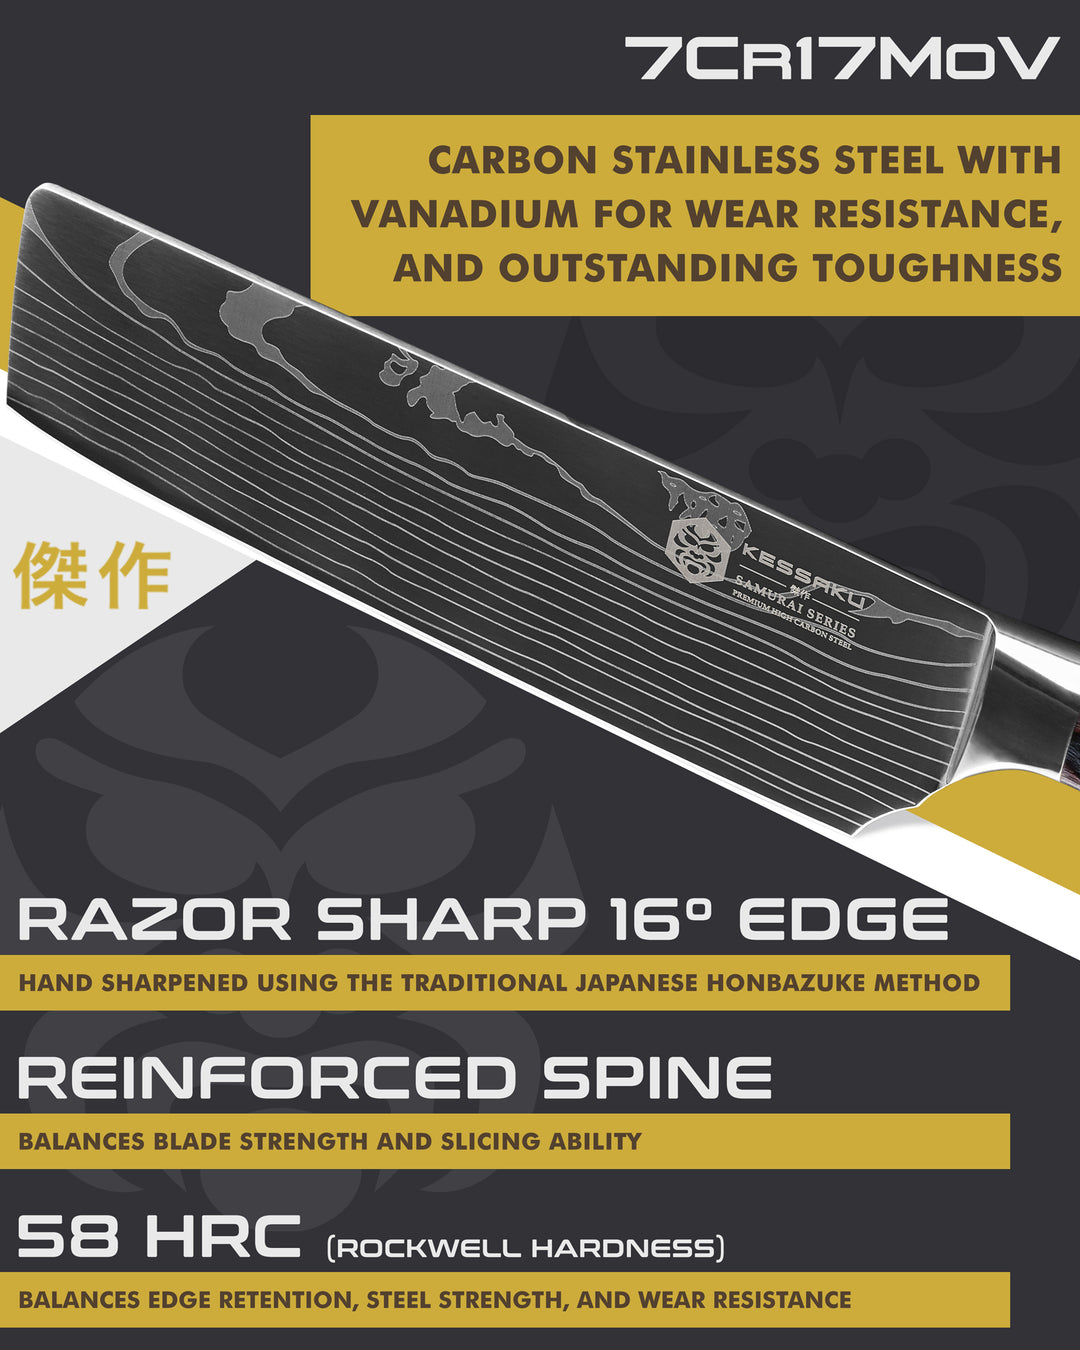 Kessaku Samurai Nakiri Knife blade features: 7Cr17MoV steel, 58 HRC, 16 degree edge, reinforced spine